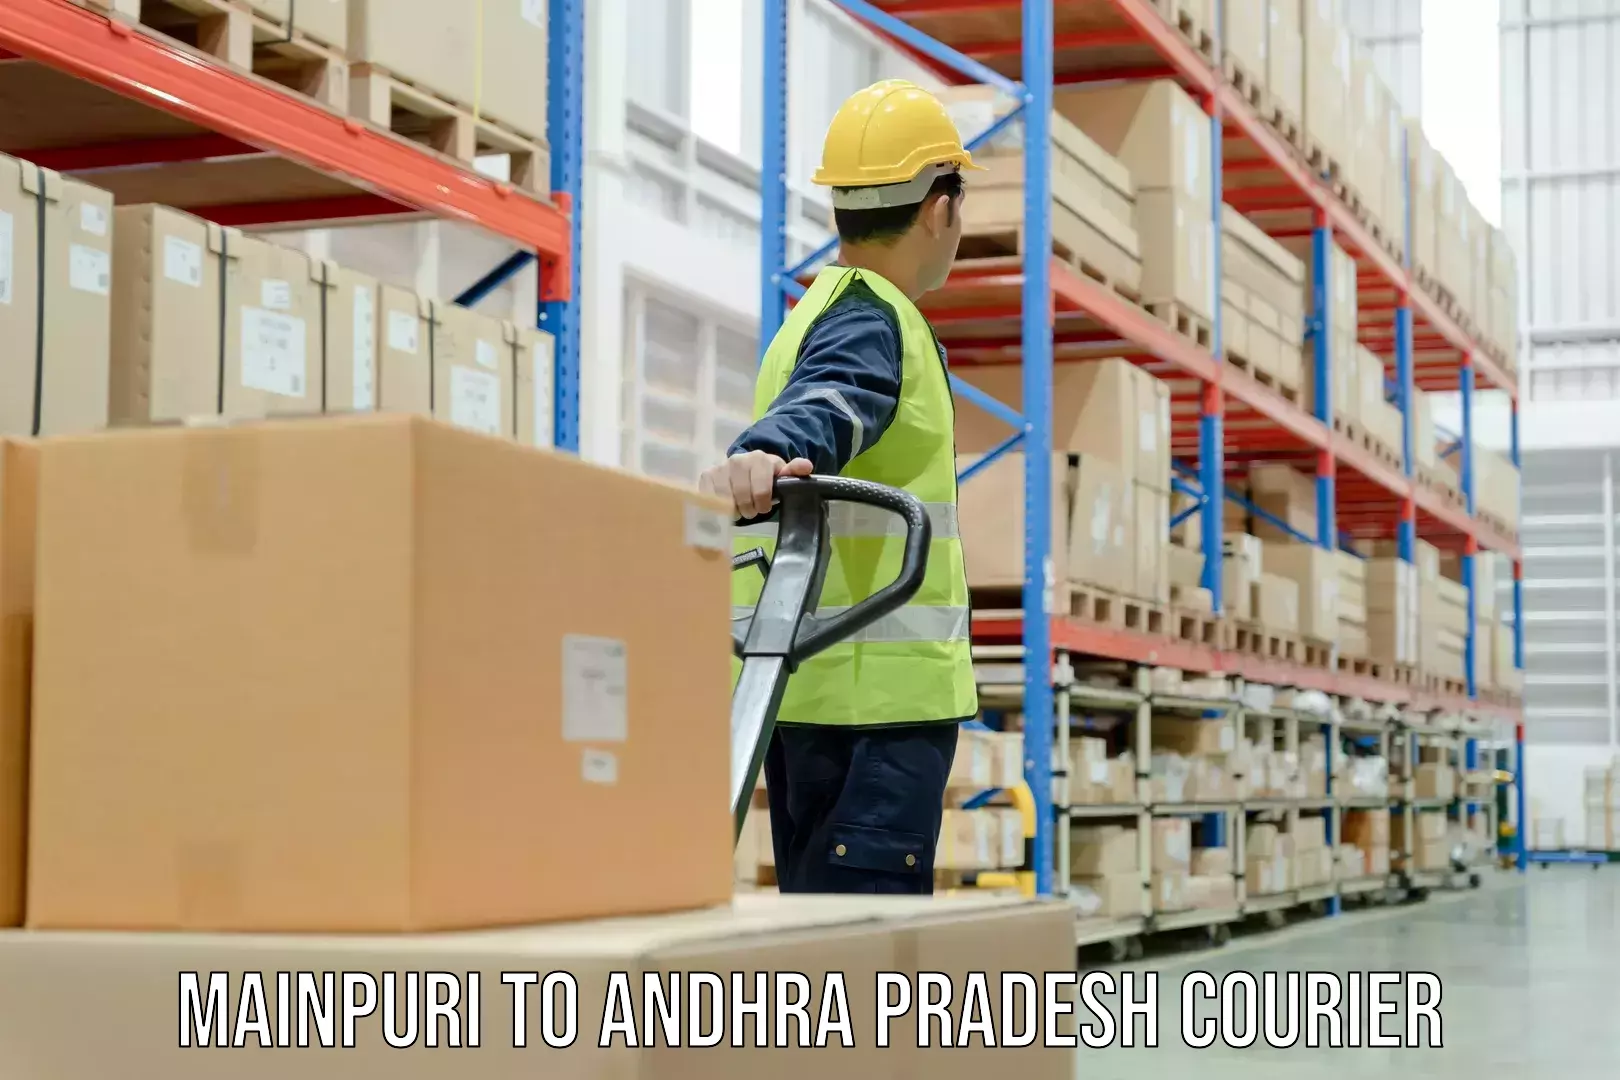 Local delivery service Mainpuri to Andhra Pradesh